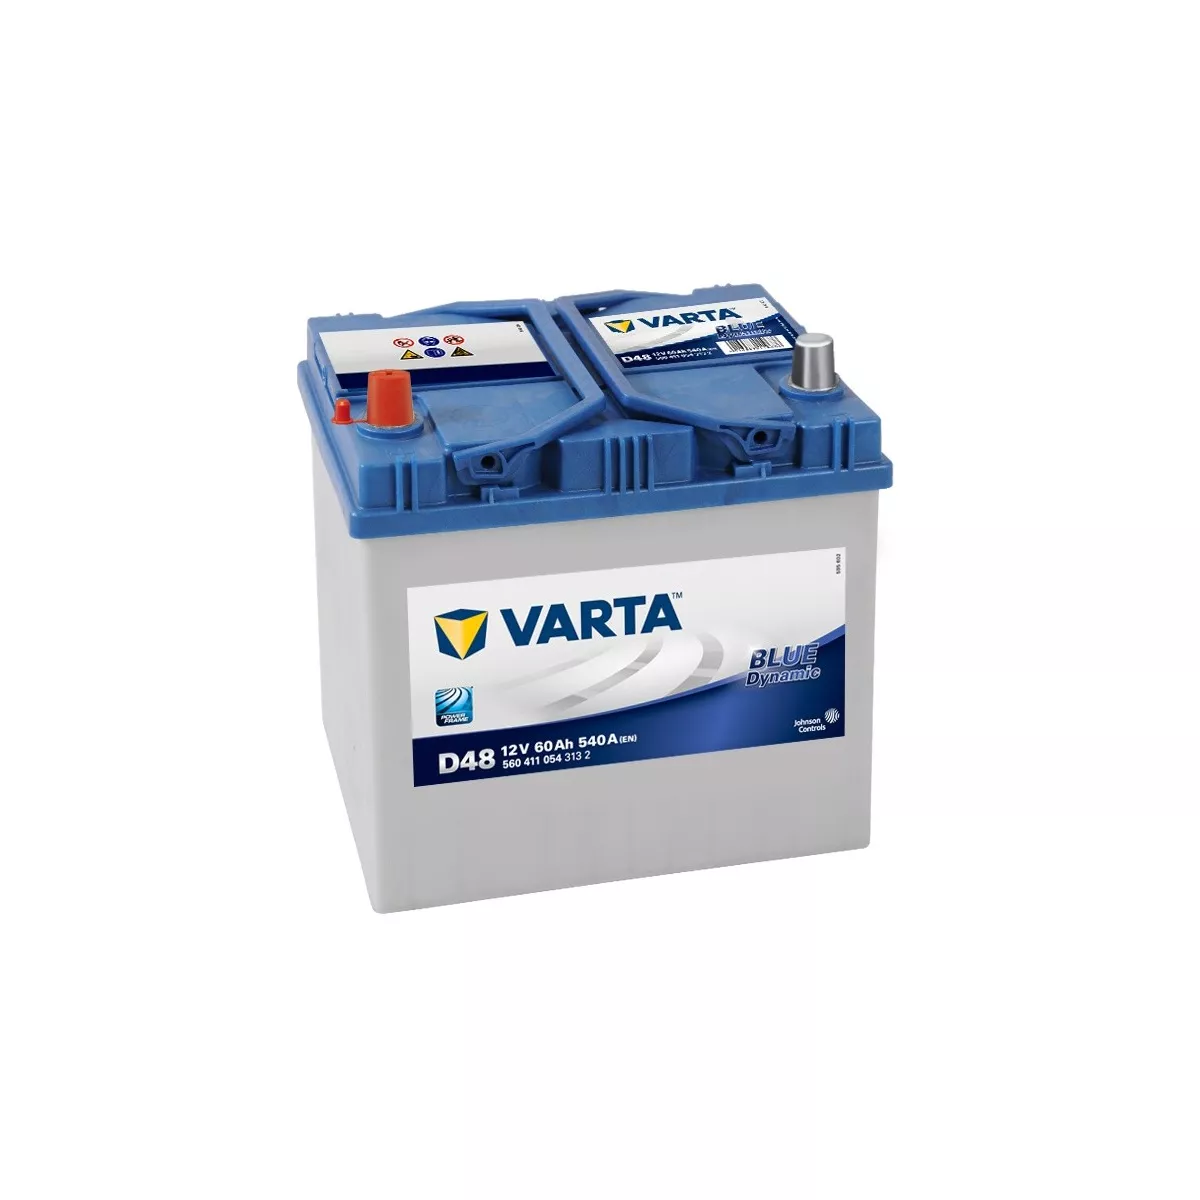 BATTERIE VARTA BLUE DYNAMIC D48 12V 60AH 540A - Batteries Auto, Voitures,  4x4, Véhicules Start & Stop Auto - BatterySet